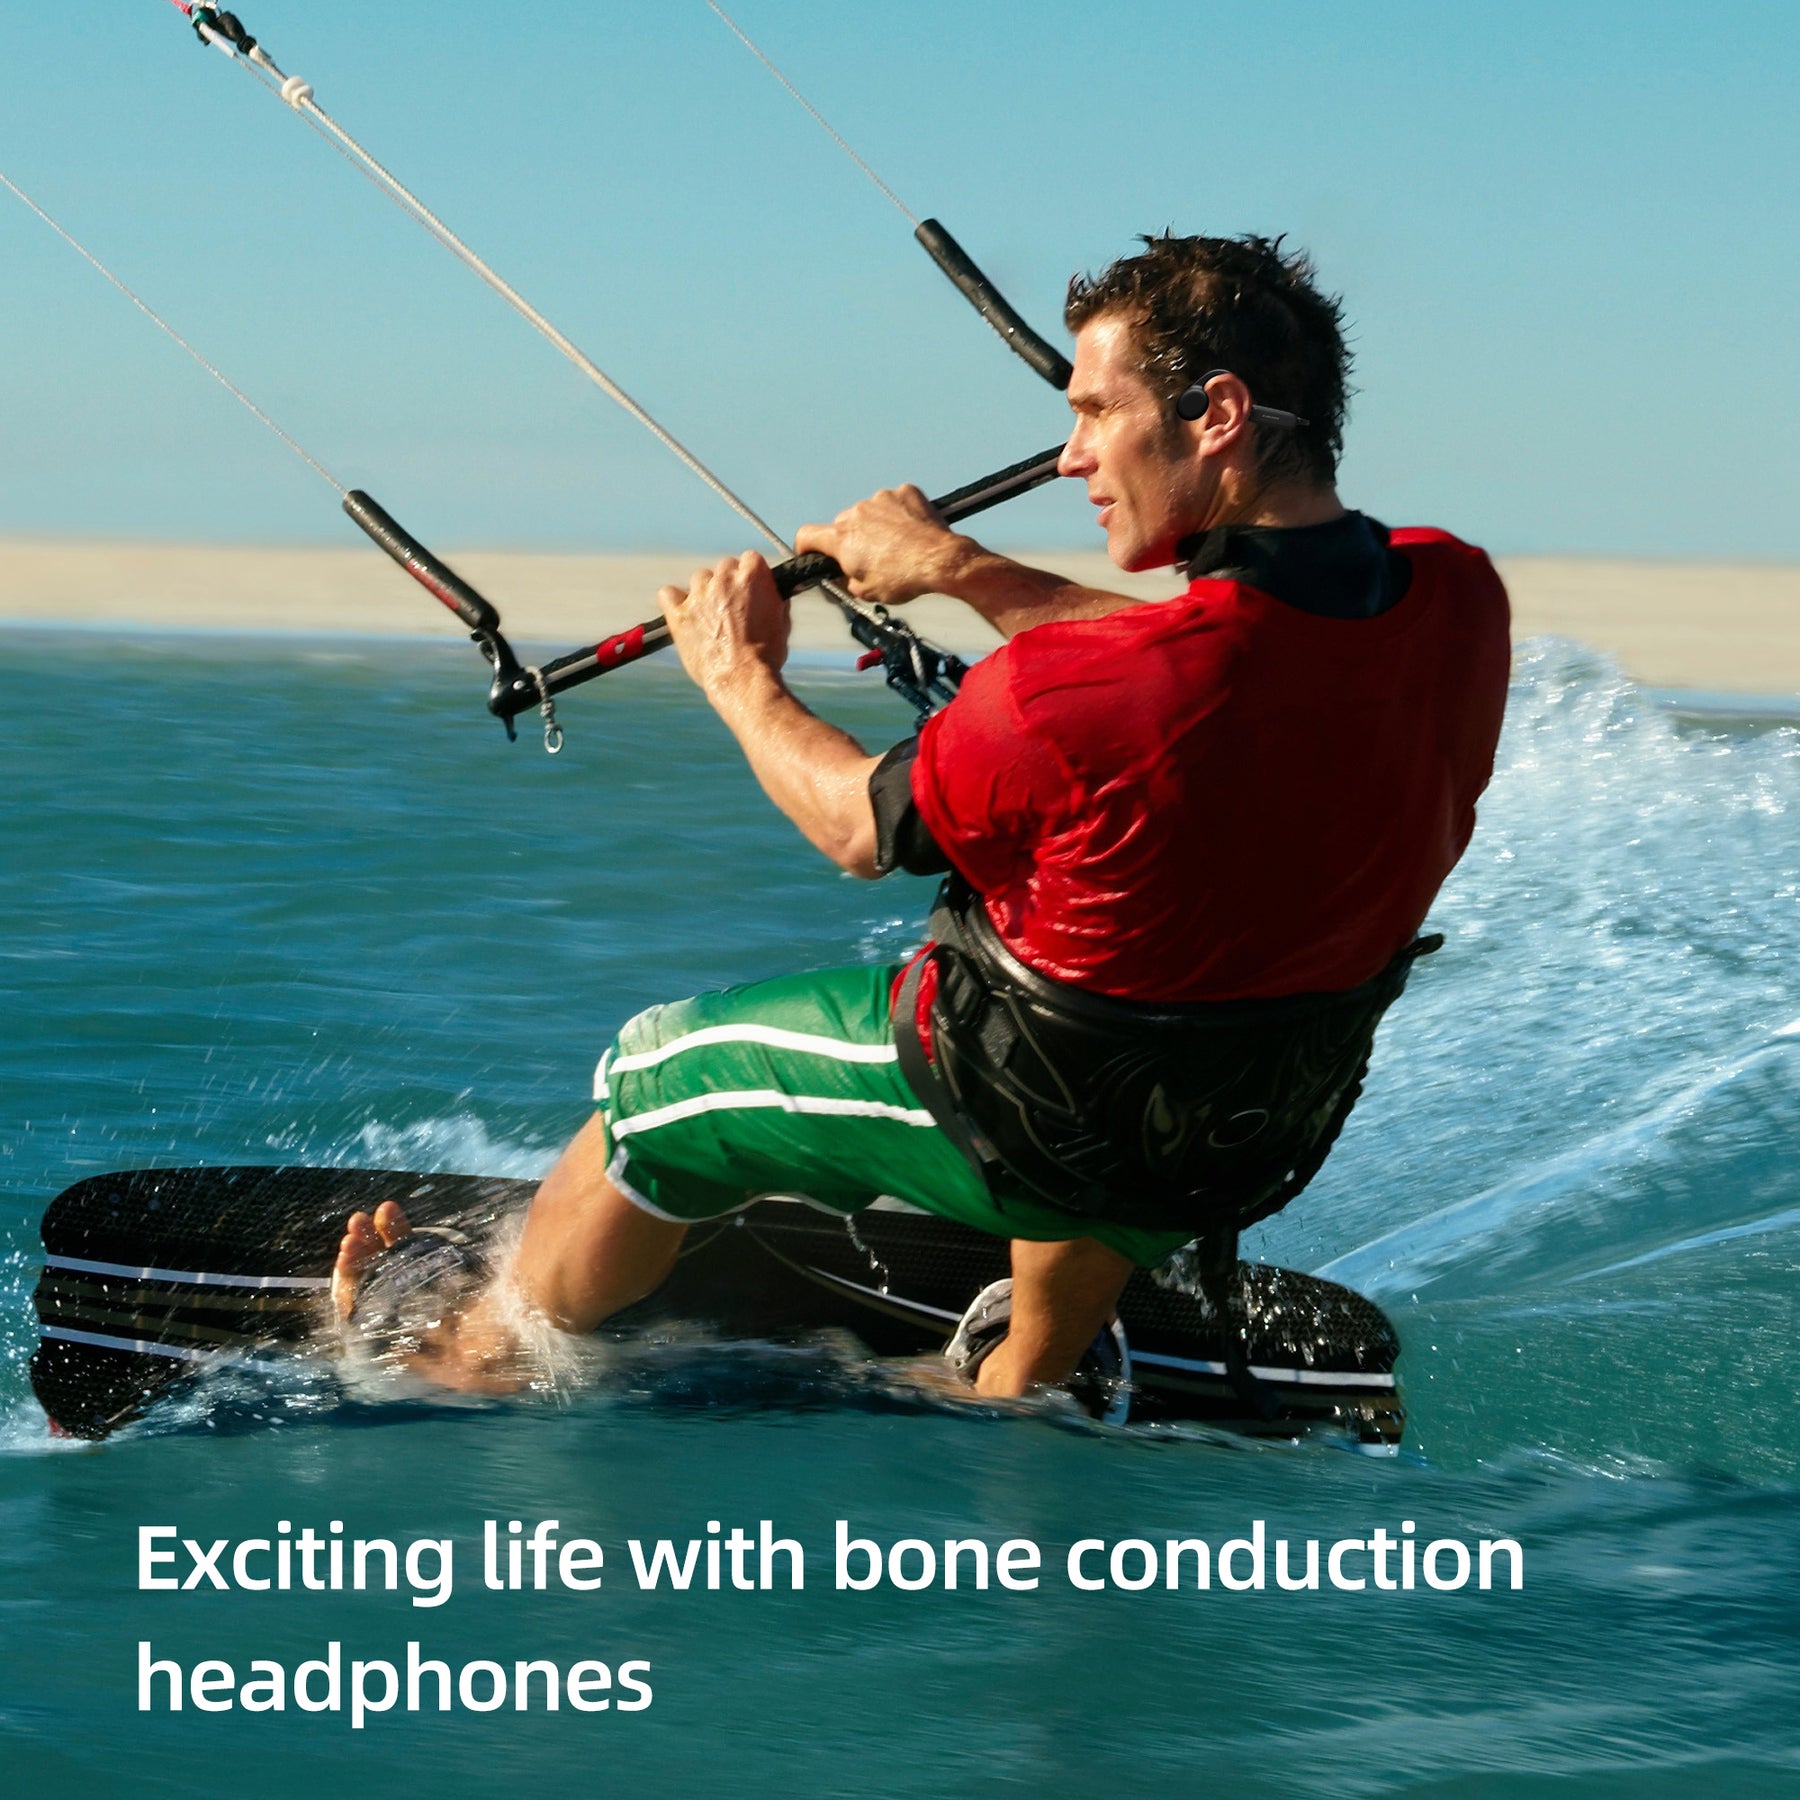 A surfer surfs wearing bone conduction headphones